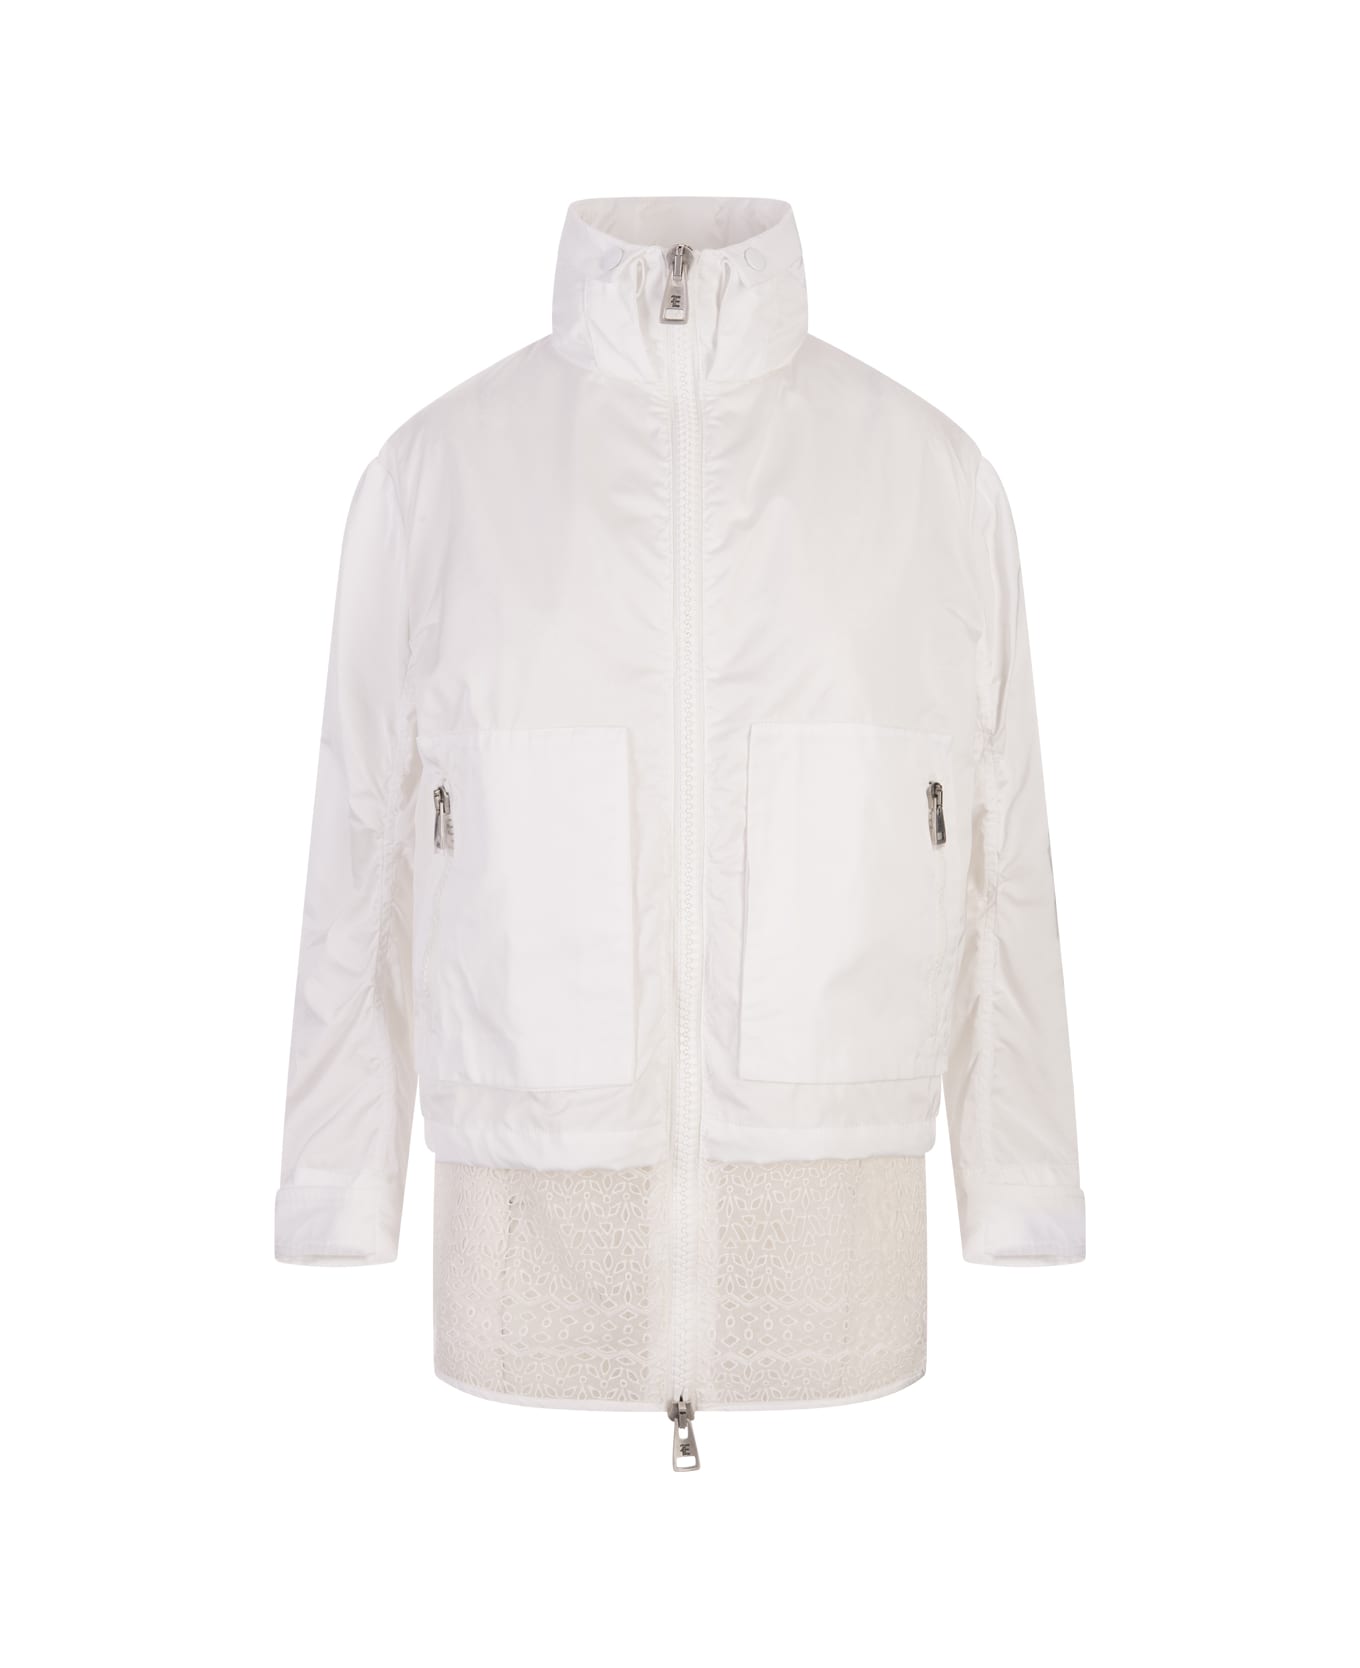 Ermanno Scervino White Windbreaker Jacket With Sangallo Lace - White ジャケット